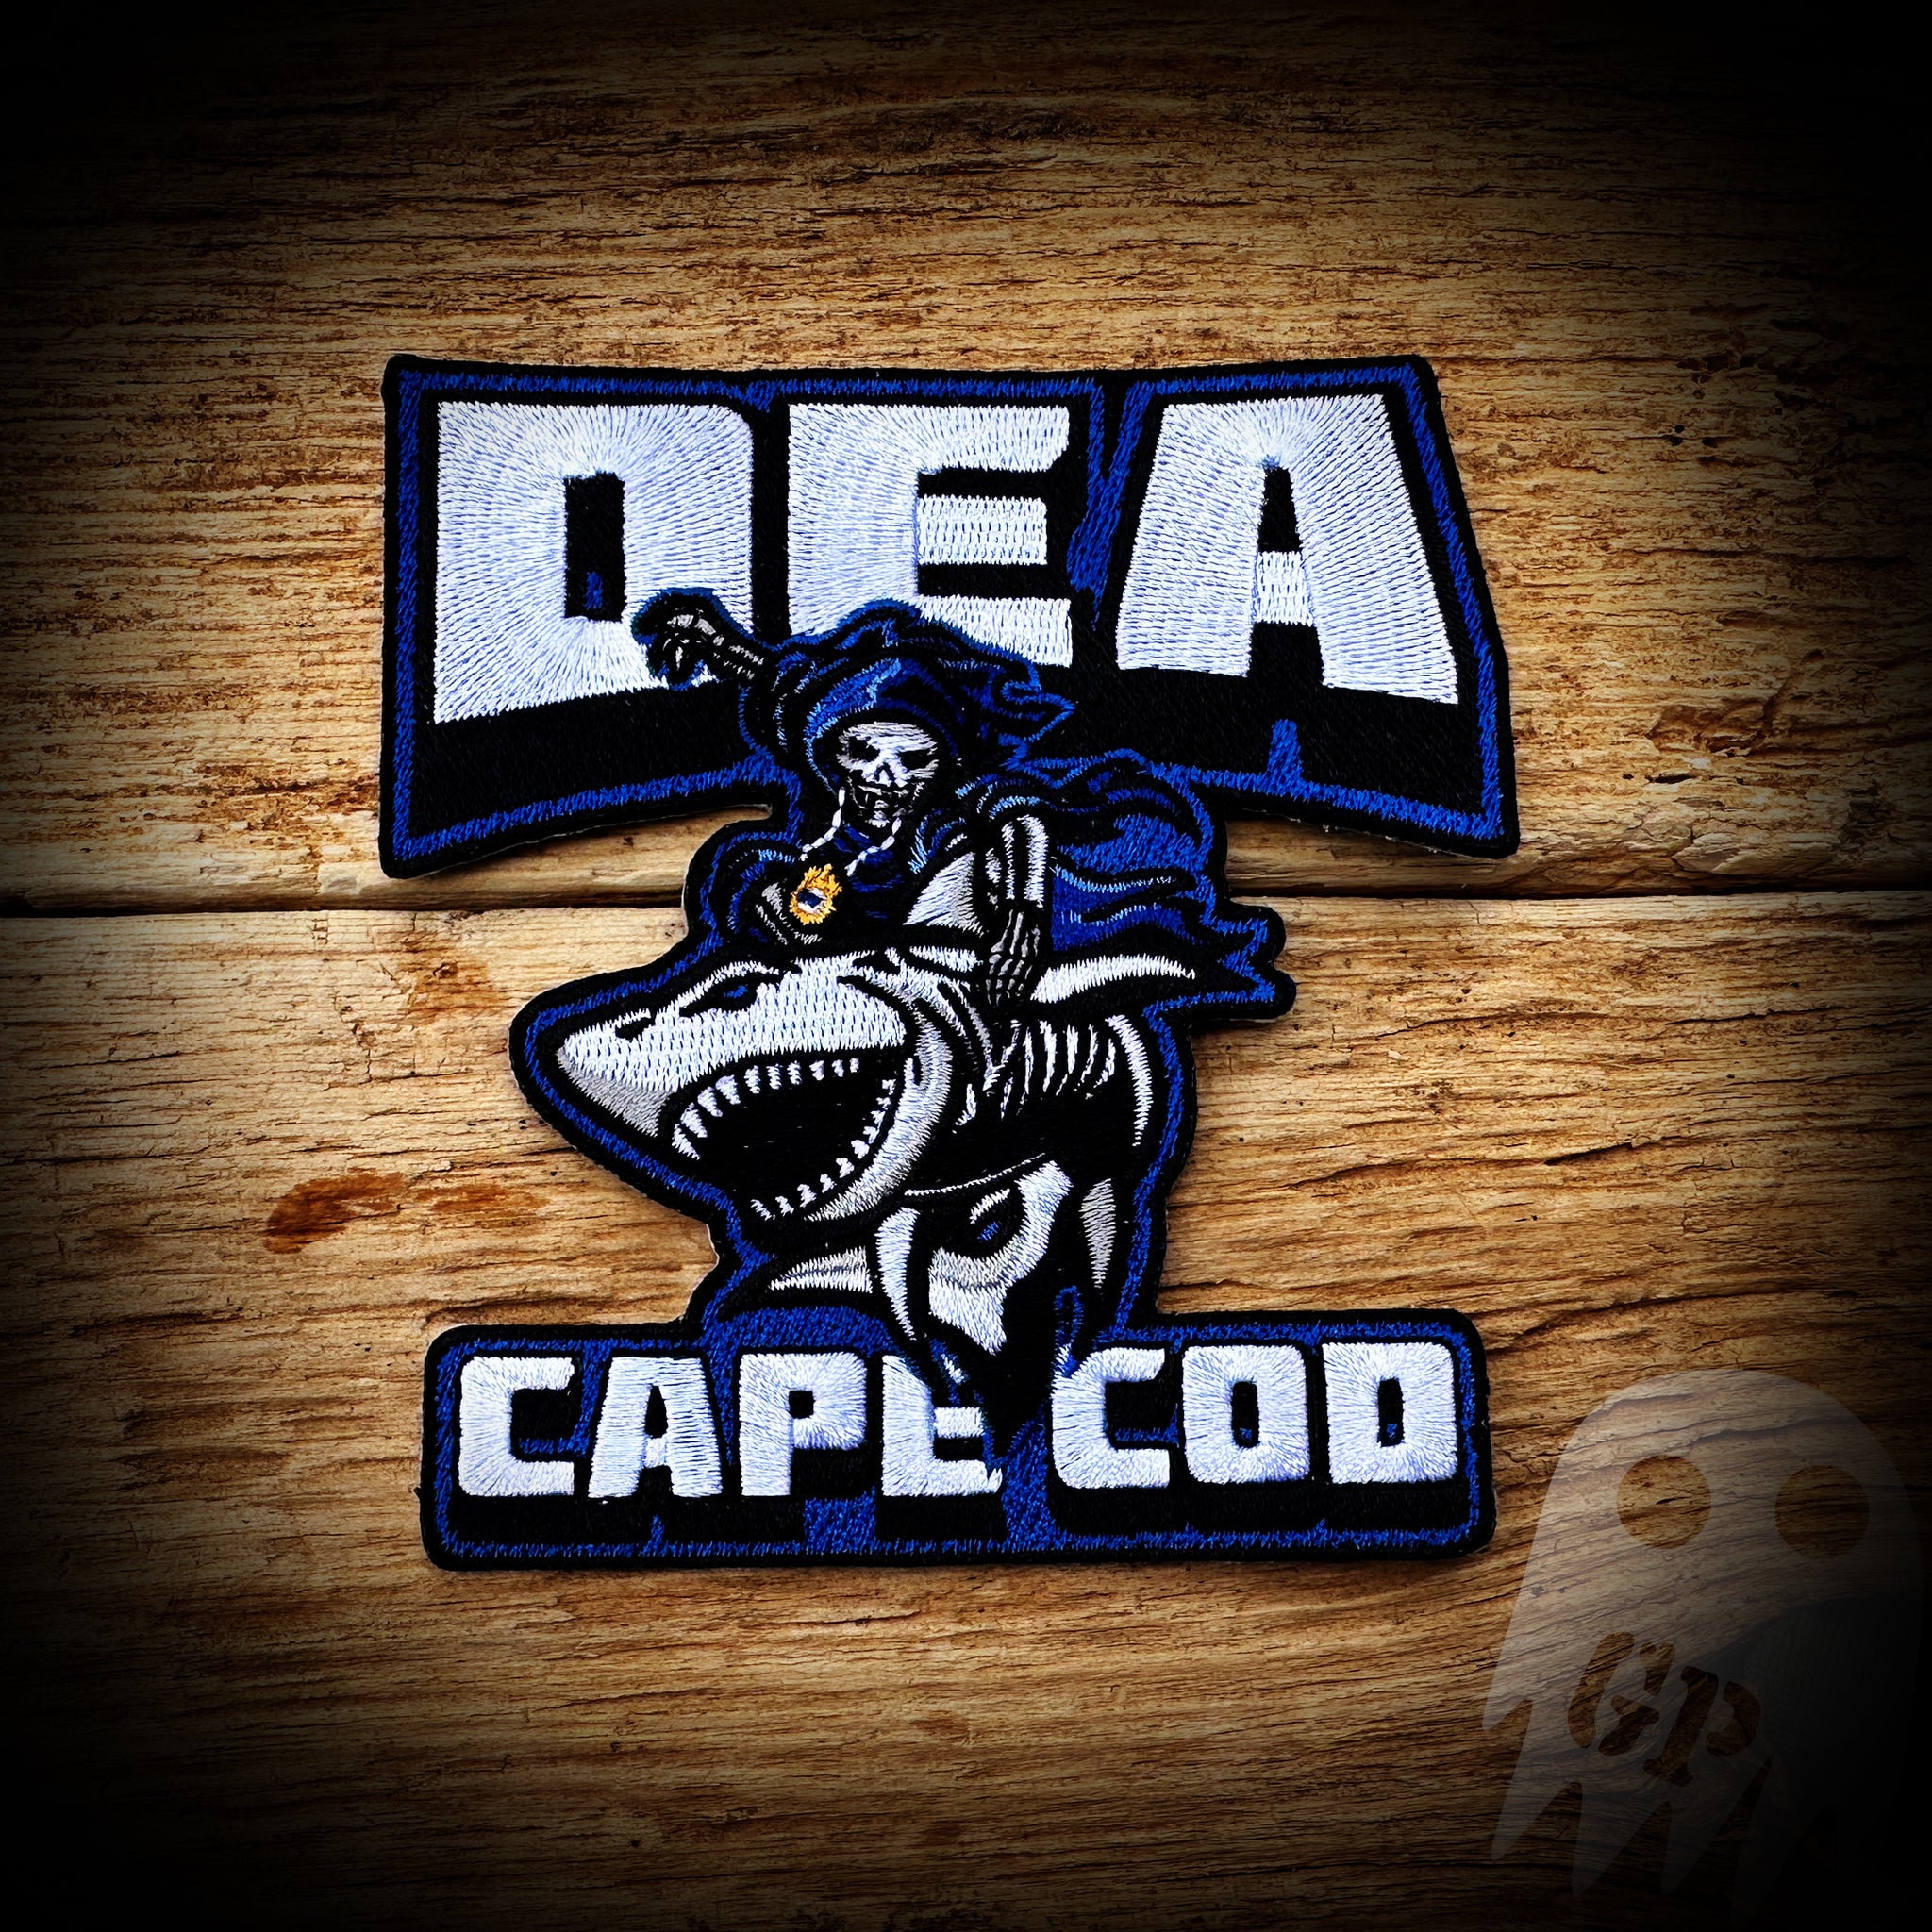 Cape Cod, MA DEA Patch - Authentic